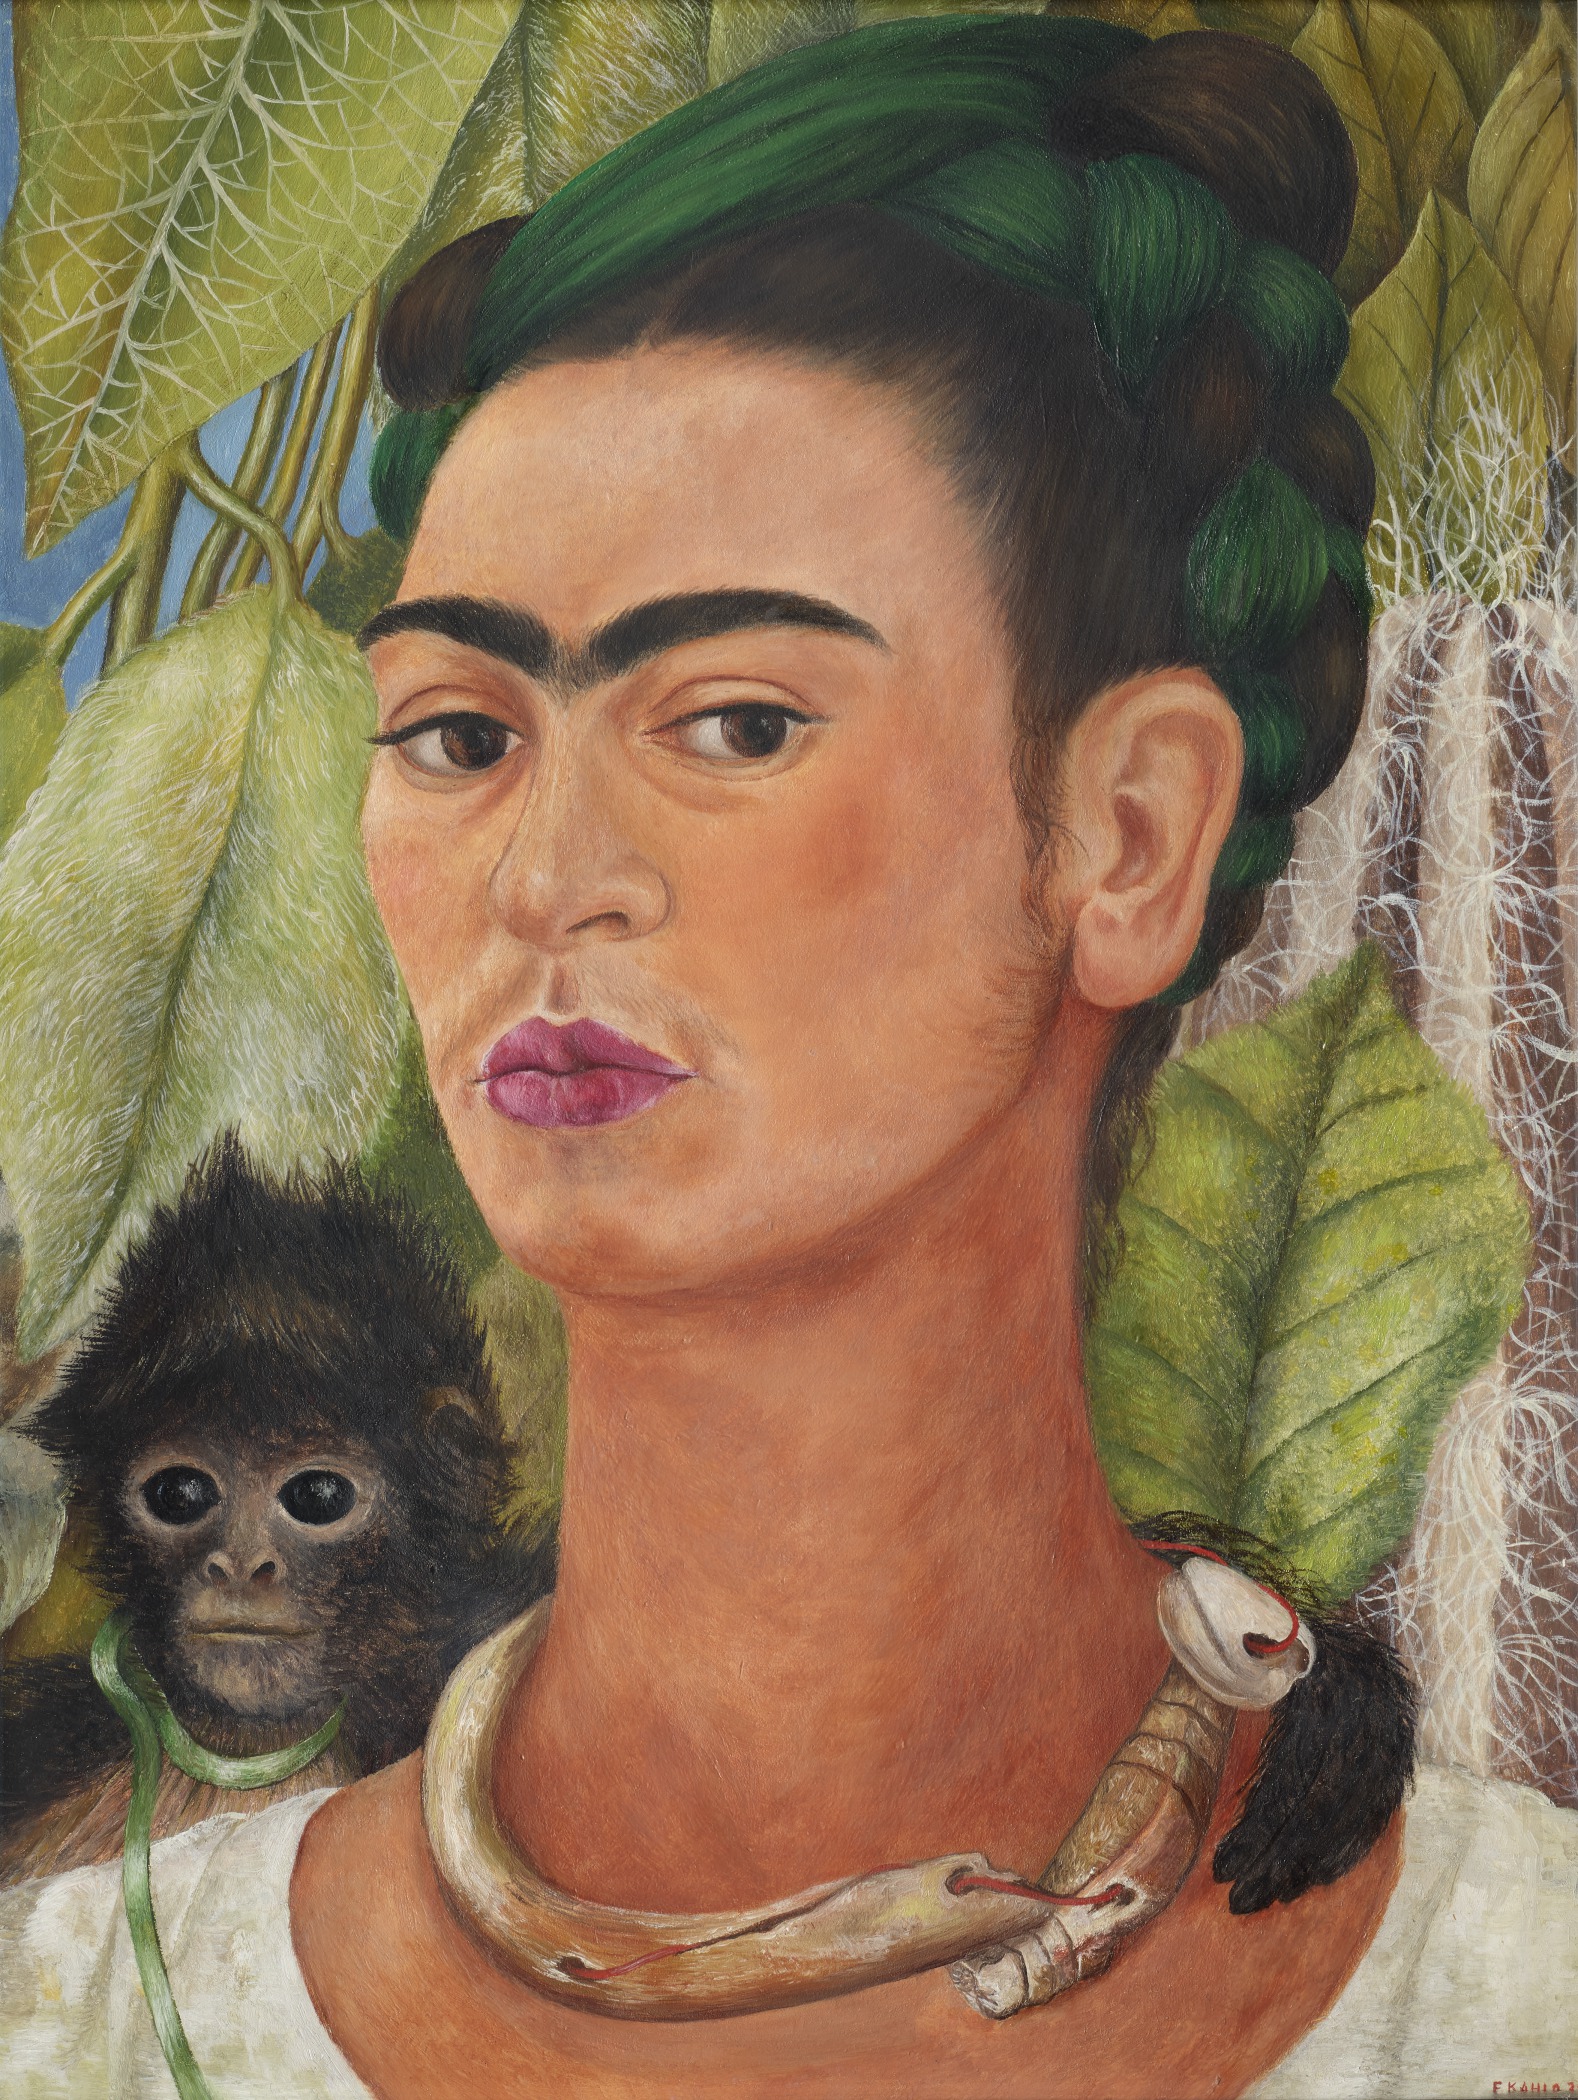 Monkey Day-Frida Kahlo, "Self-Portrait with Monkey," 1938, oil on masonite, 16 x 12 in (40.64 x 30.48cm), Albright-Knox Art Gallery, Buffalo, New York, USA.